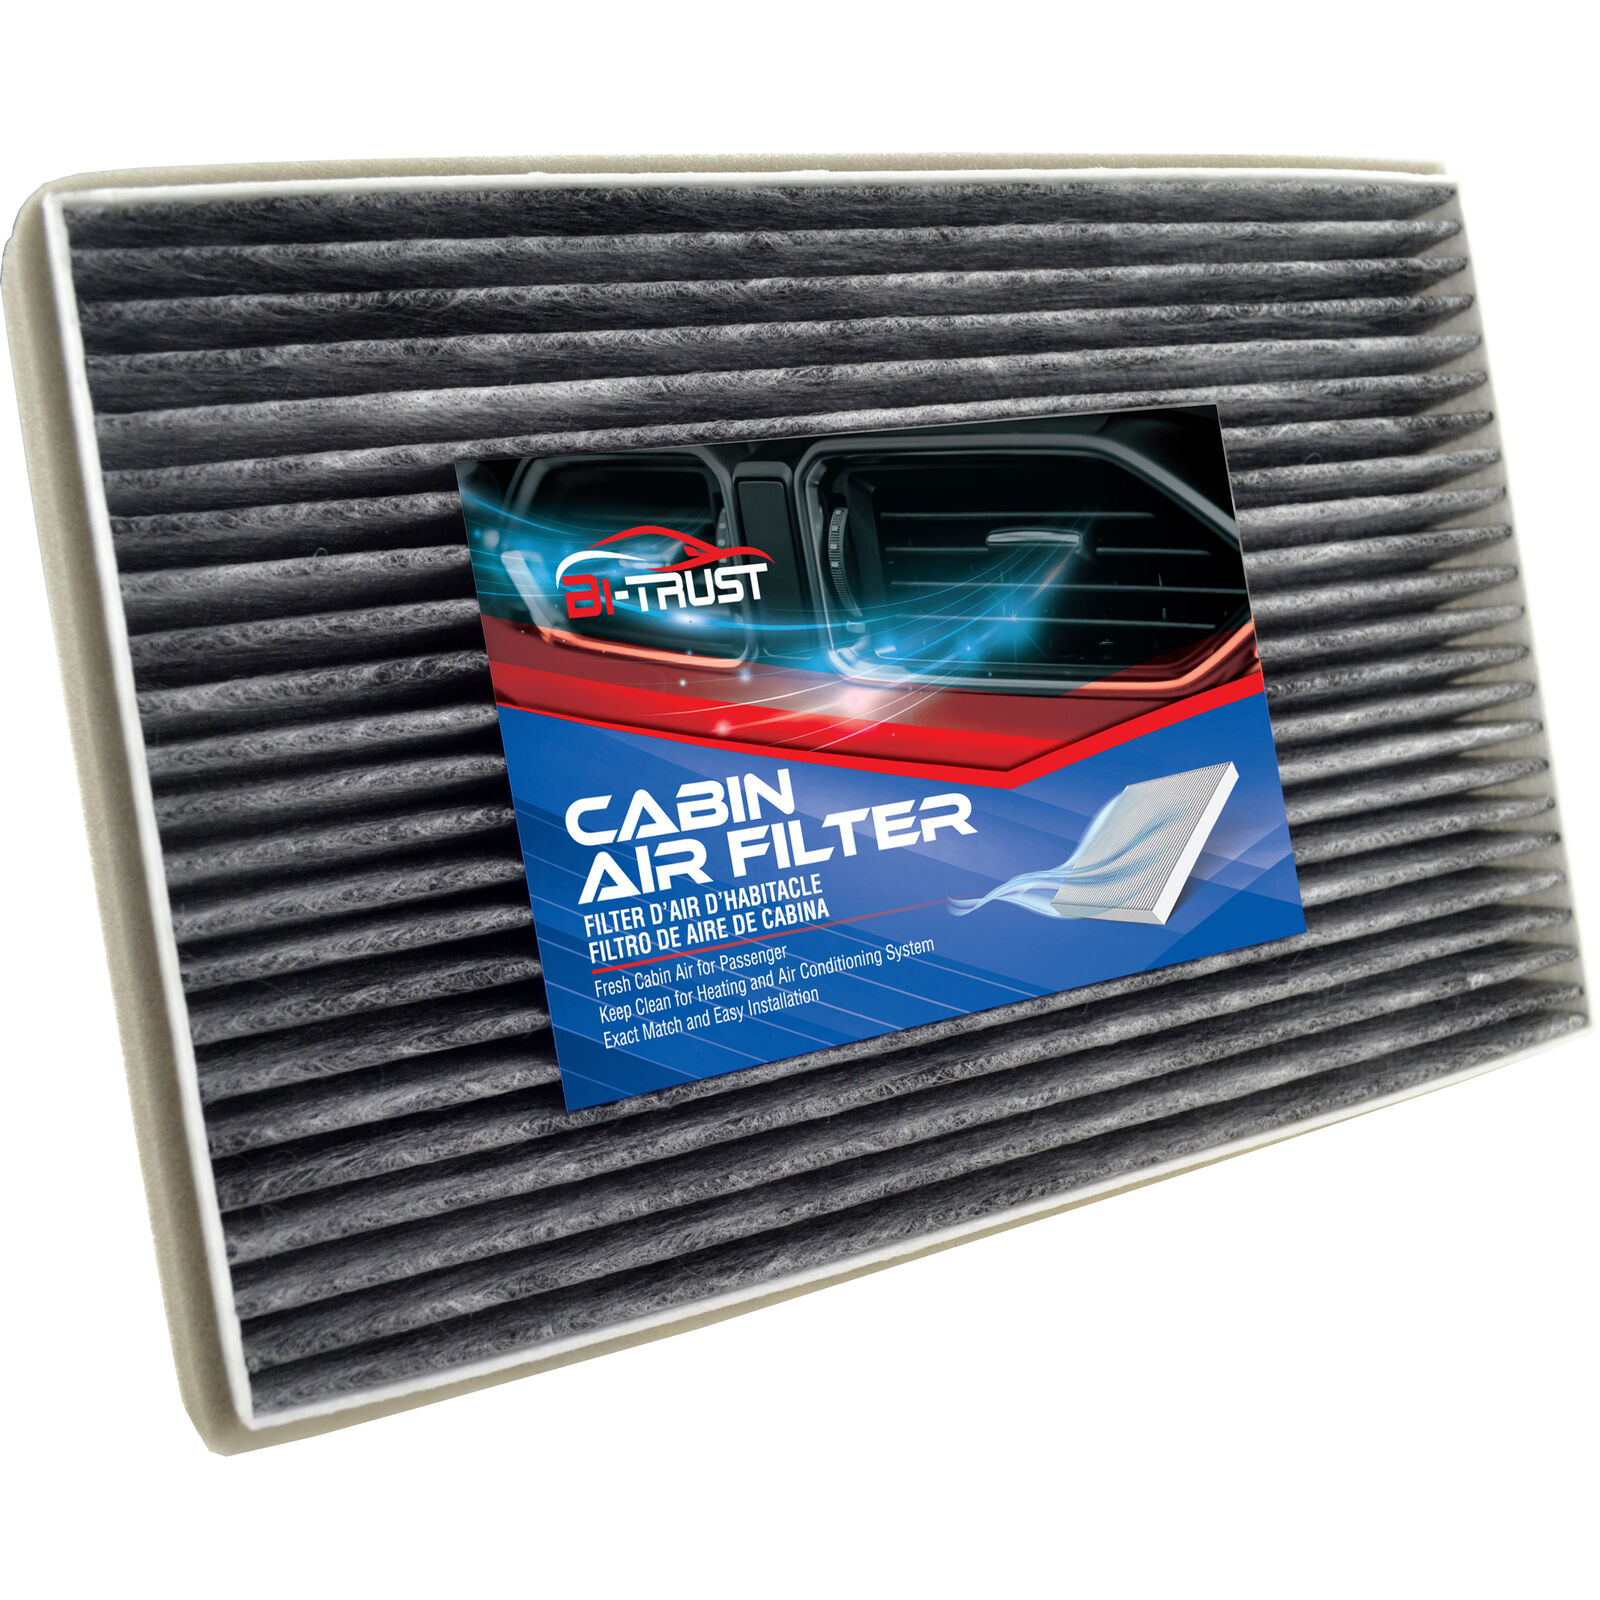 Cabin Air Filter for Chevy Impala Monte Carlo Intrigue Pontiac Grand Prix